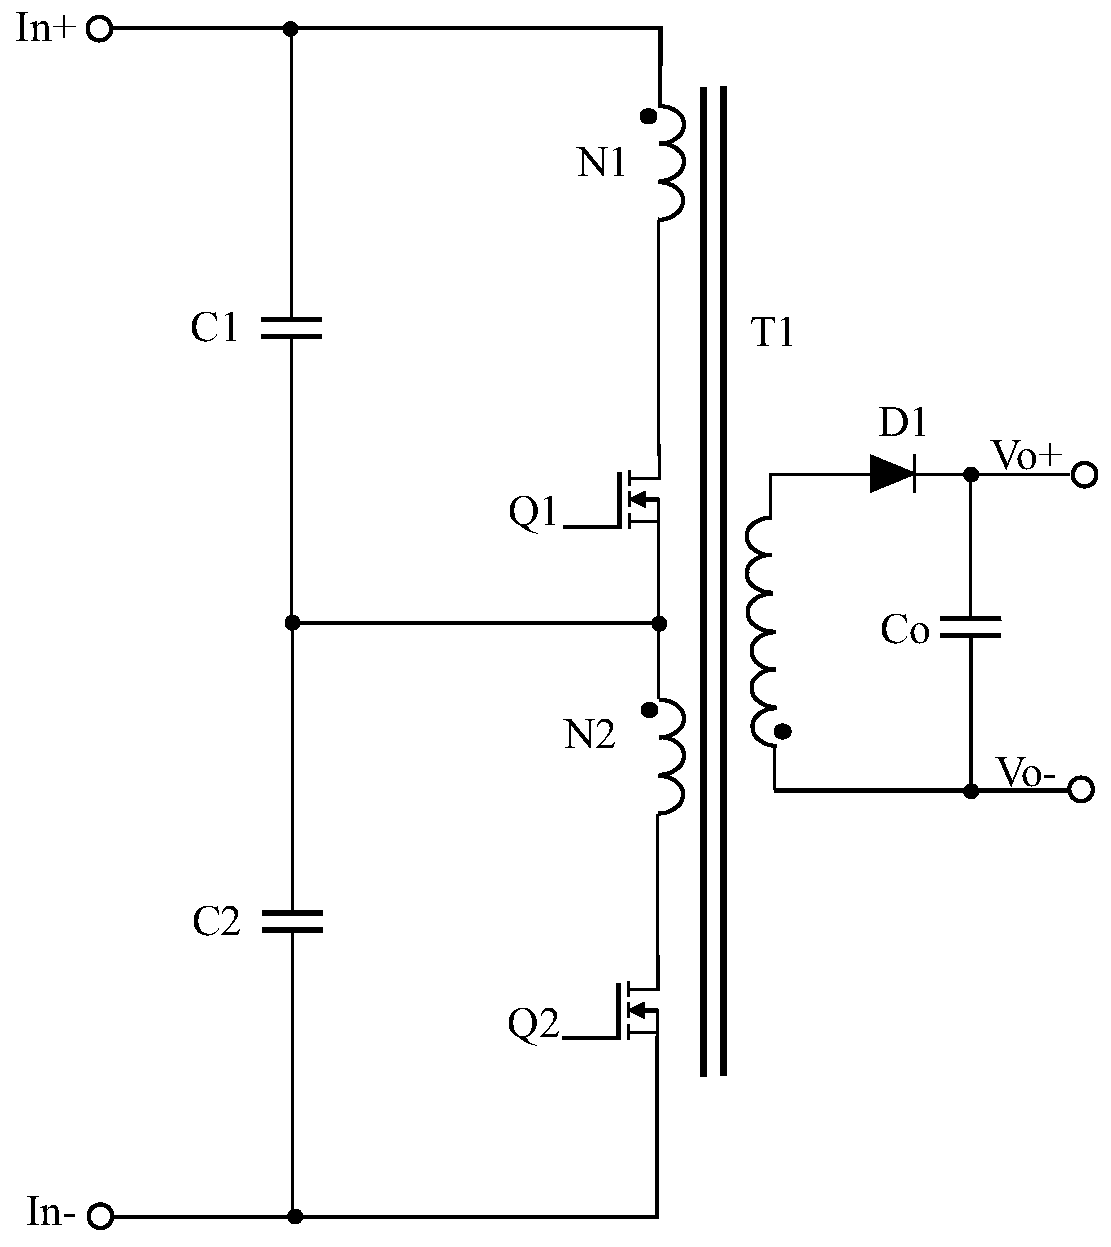 High-voltage power supply circuit